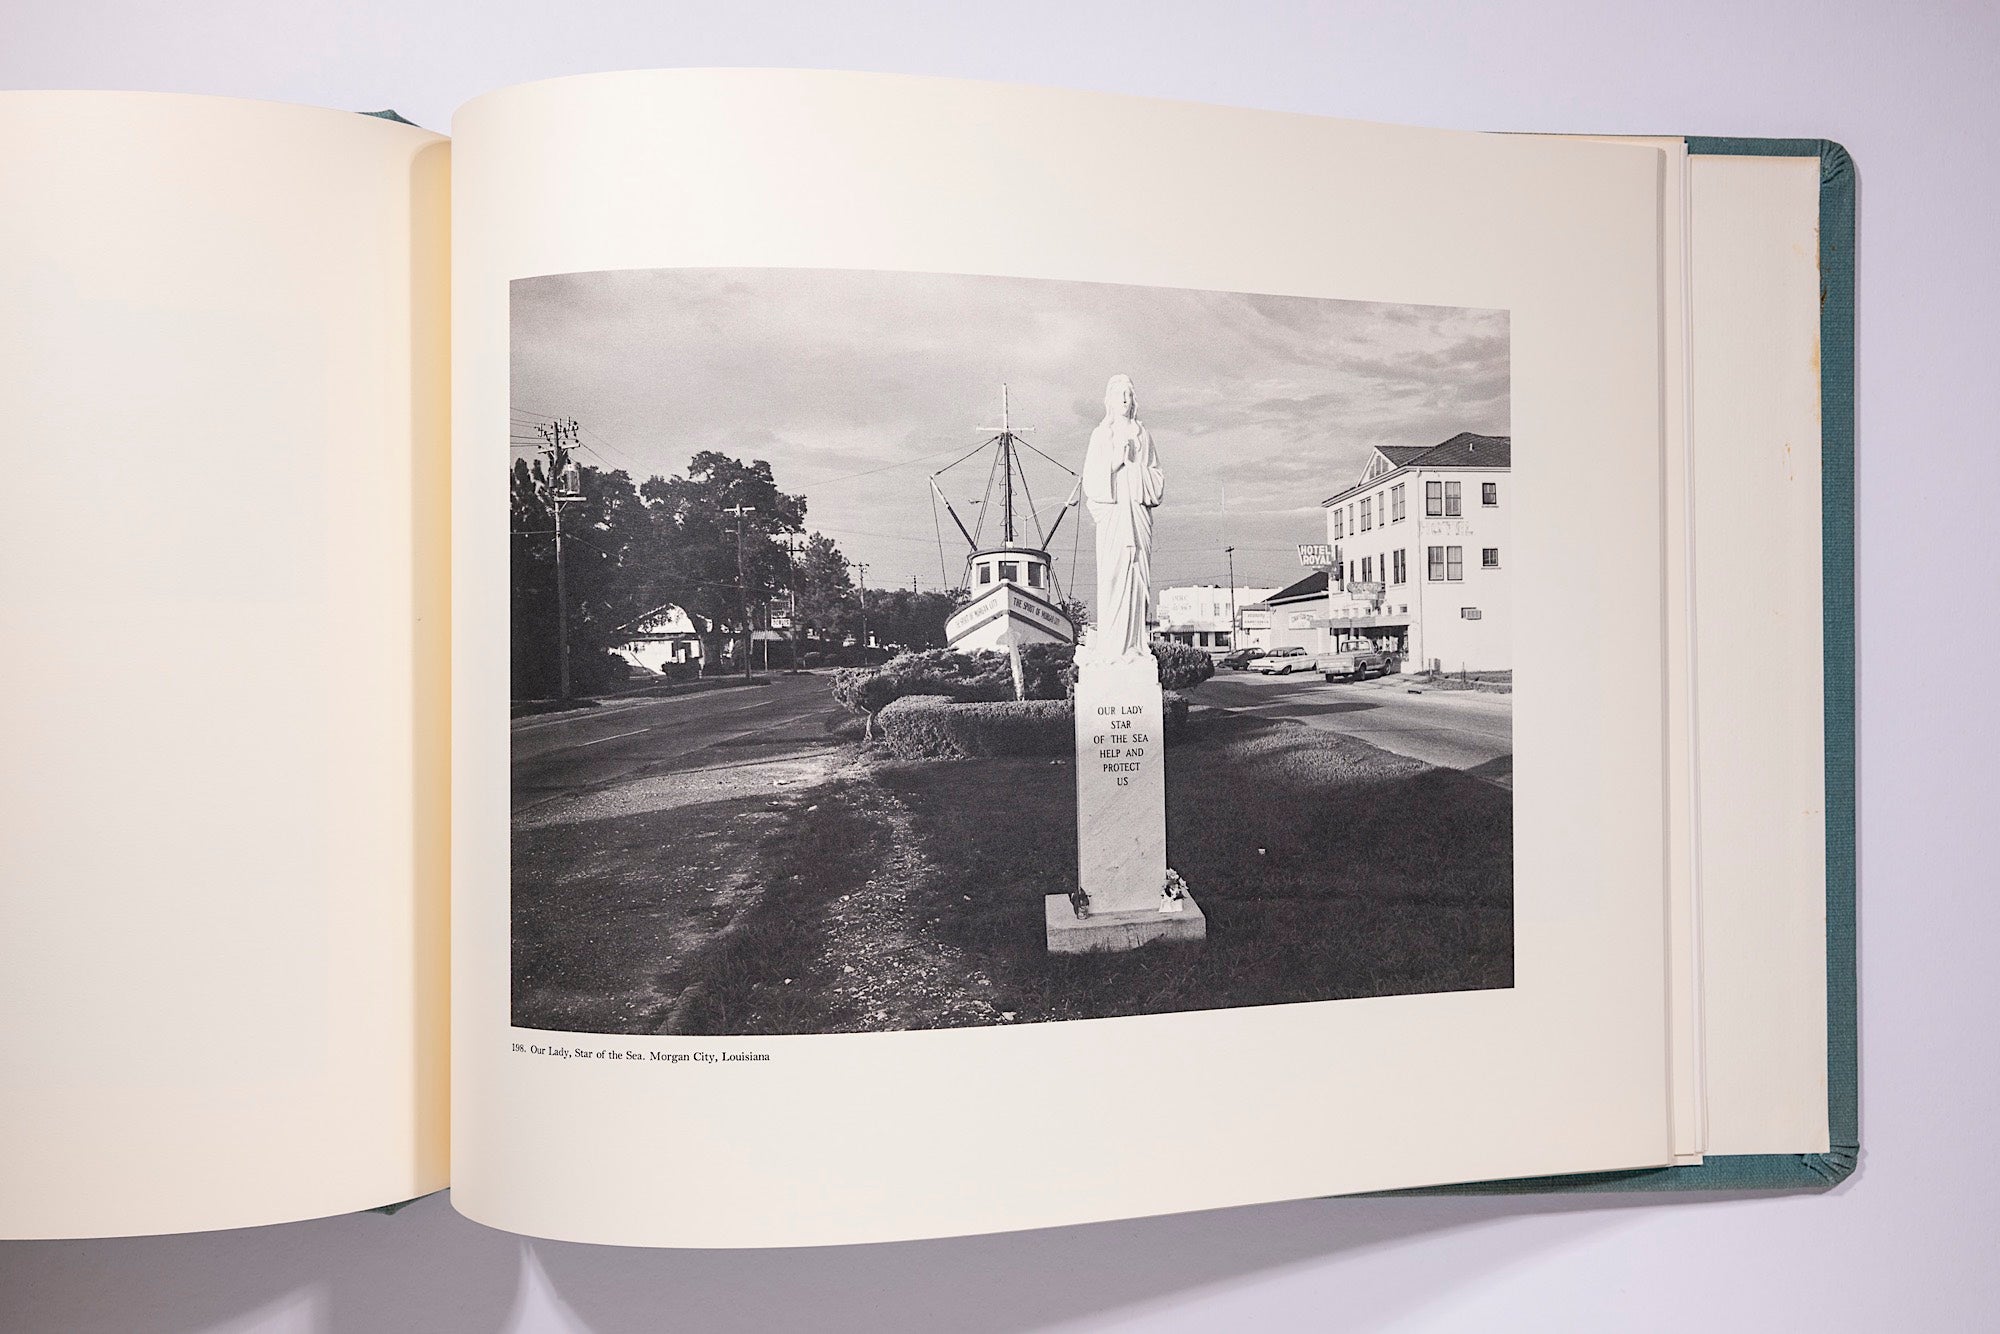 Lee Friedlander - The American Monument, 1976